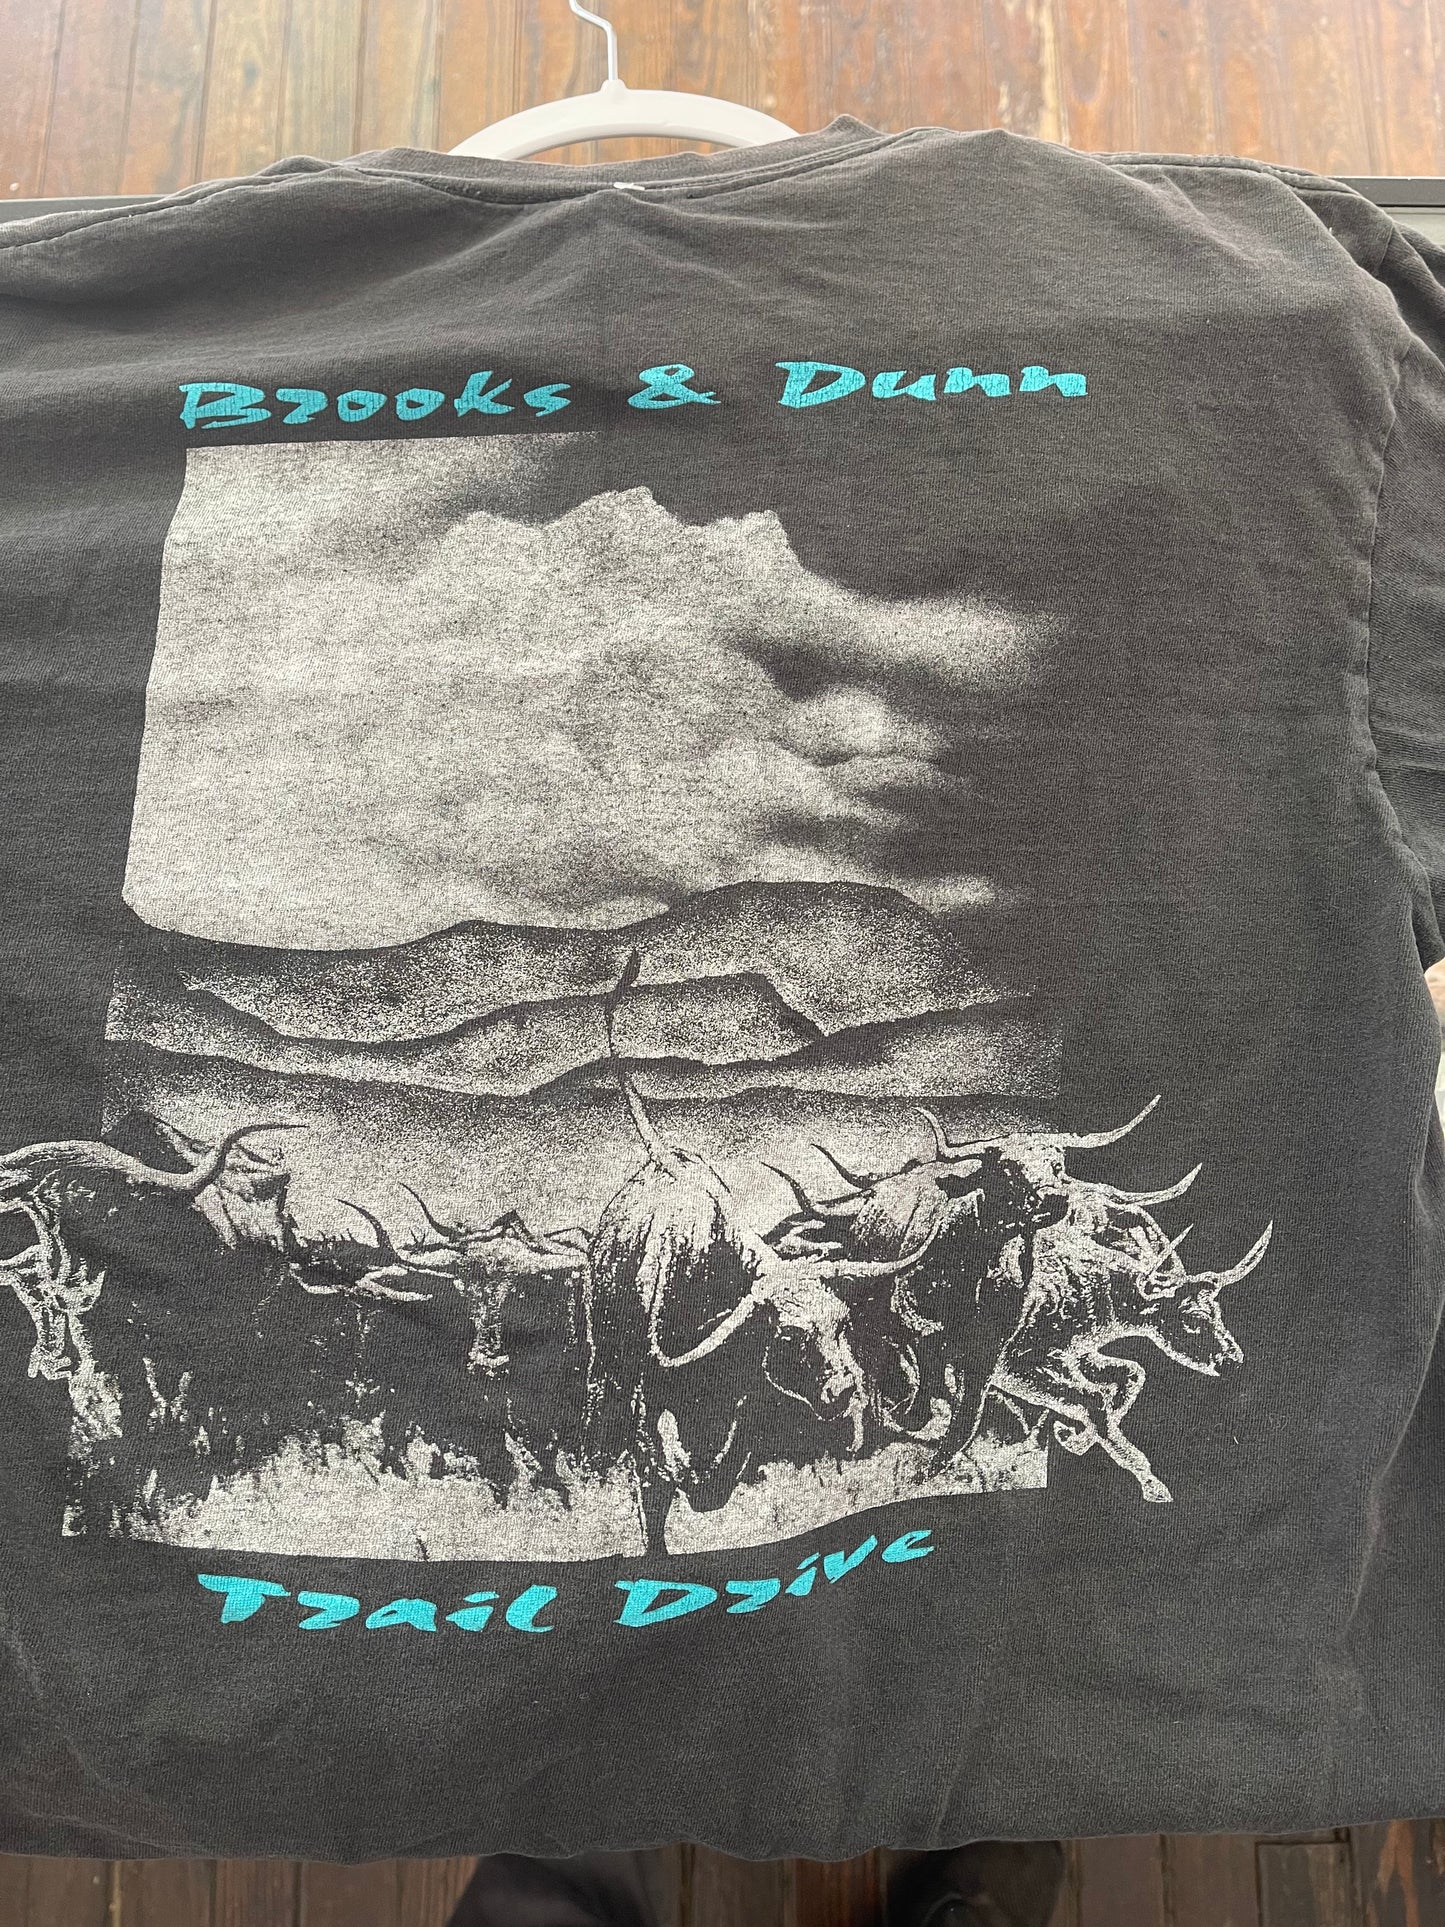 1992 Brooks & Dunn “ Trail Drive” XL Shirt